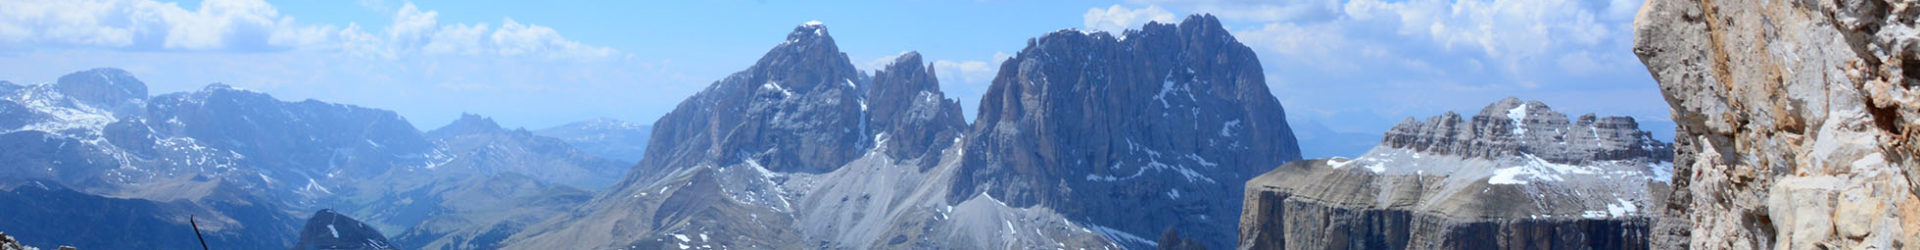 Scuola Alpinismo CAI Bolzano